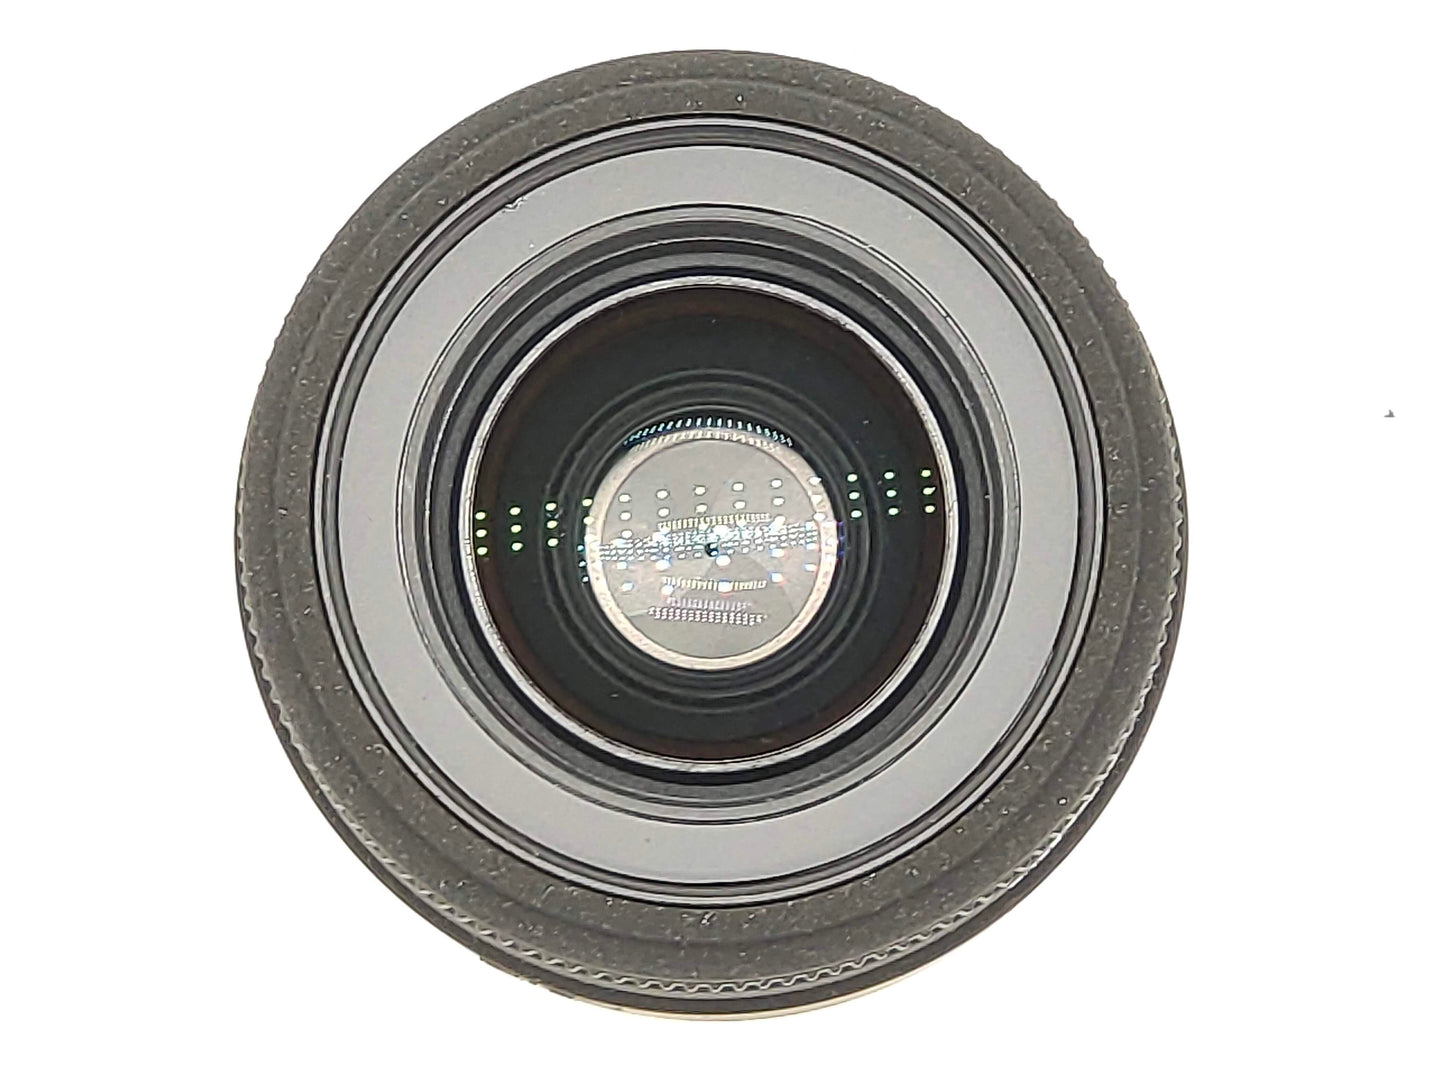 Sigma 50mm f/2.8 DG Macro lens for Nikon Autofocus SLRs. As new condition.